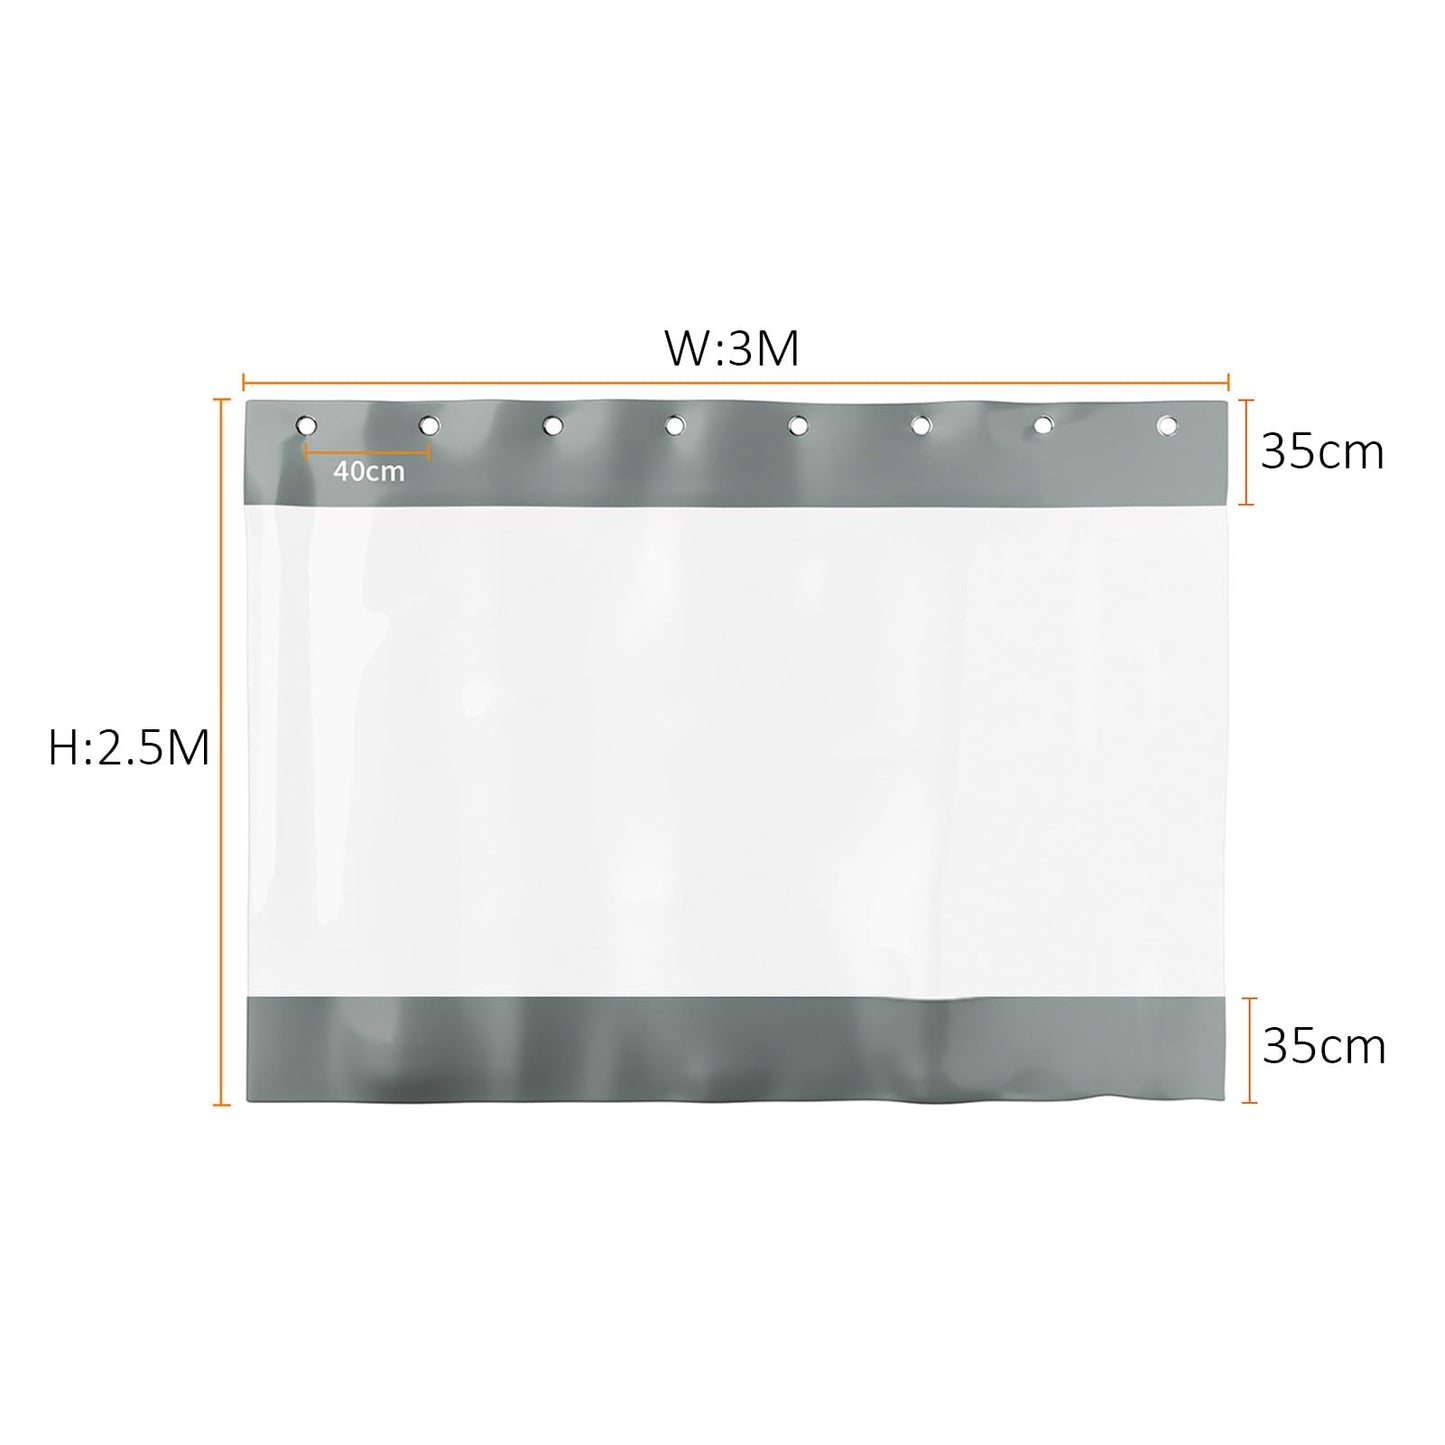 CLXRZM Exterior Impermeable Vinilo Lona Cortinas, Cortina Transparente al Aire Libre, 0.6mm PVC Duradera Panel Lateral con Ojales para Porche Terraza Pérgola, 3 Tamaños